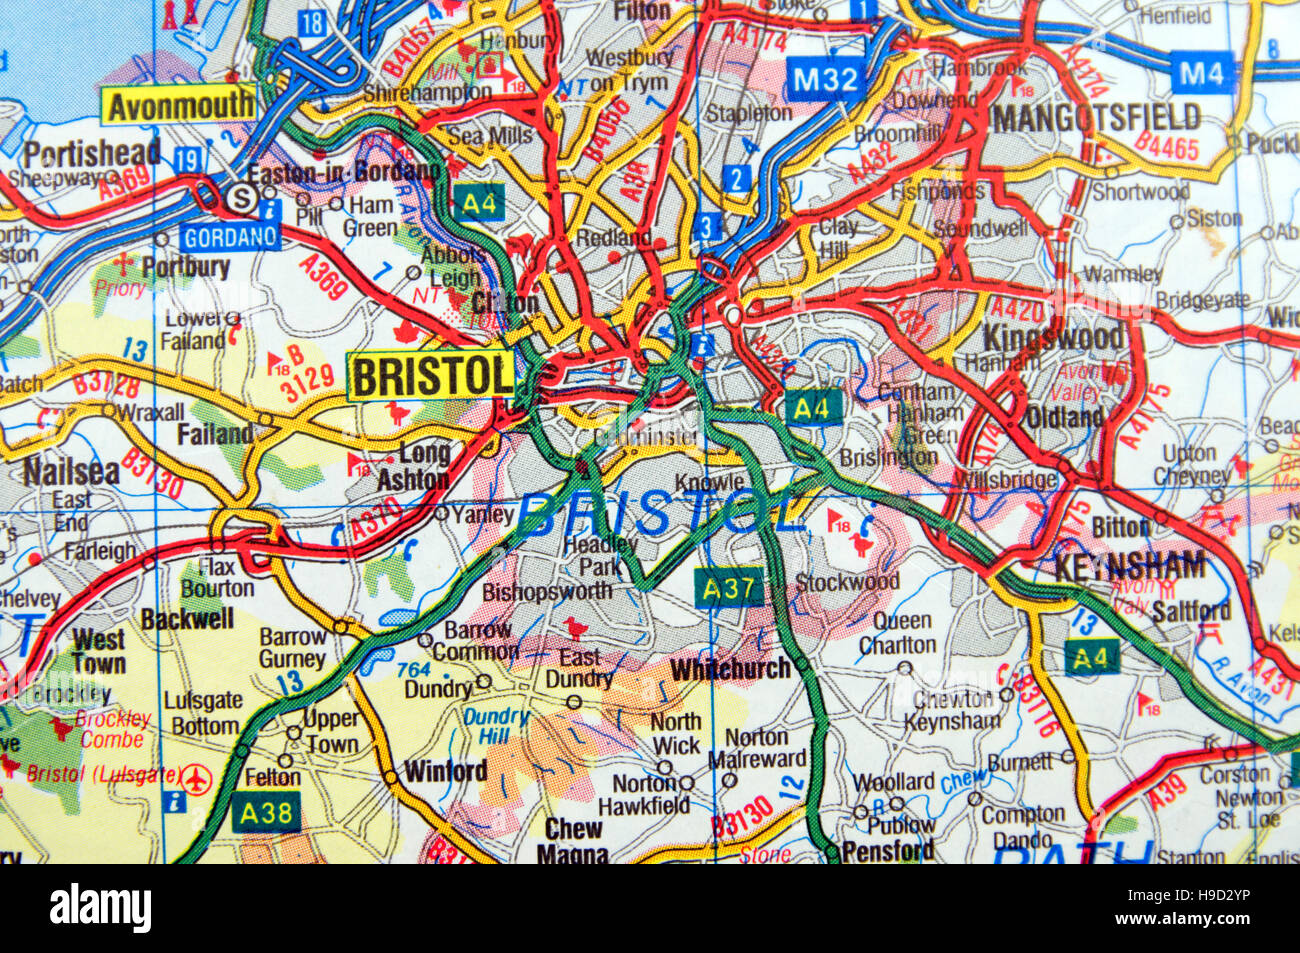 Road Map of Bristol, England Stock Photo: 126292202 - Alamy